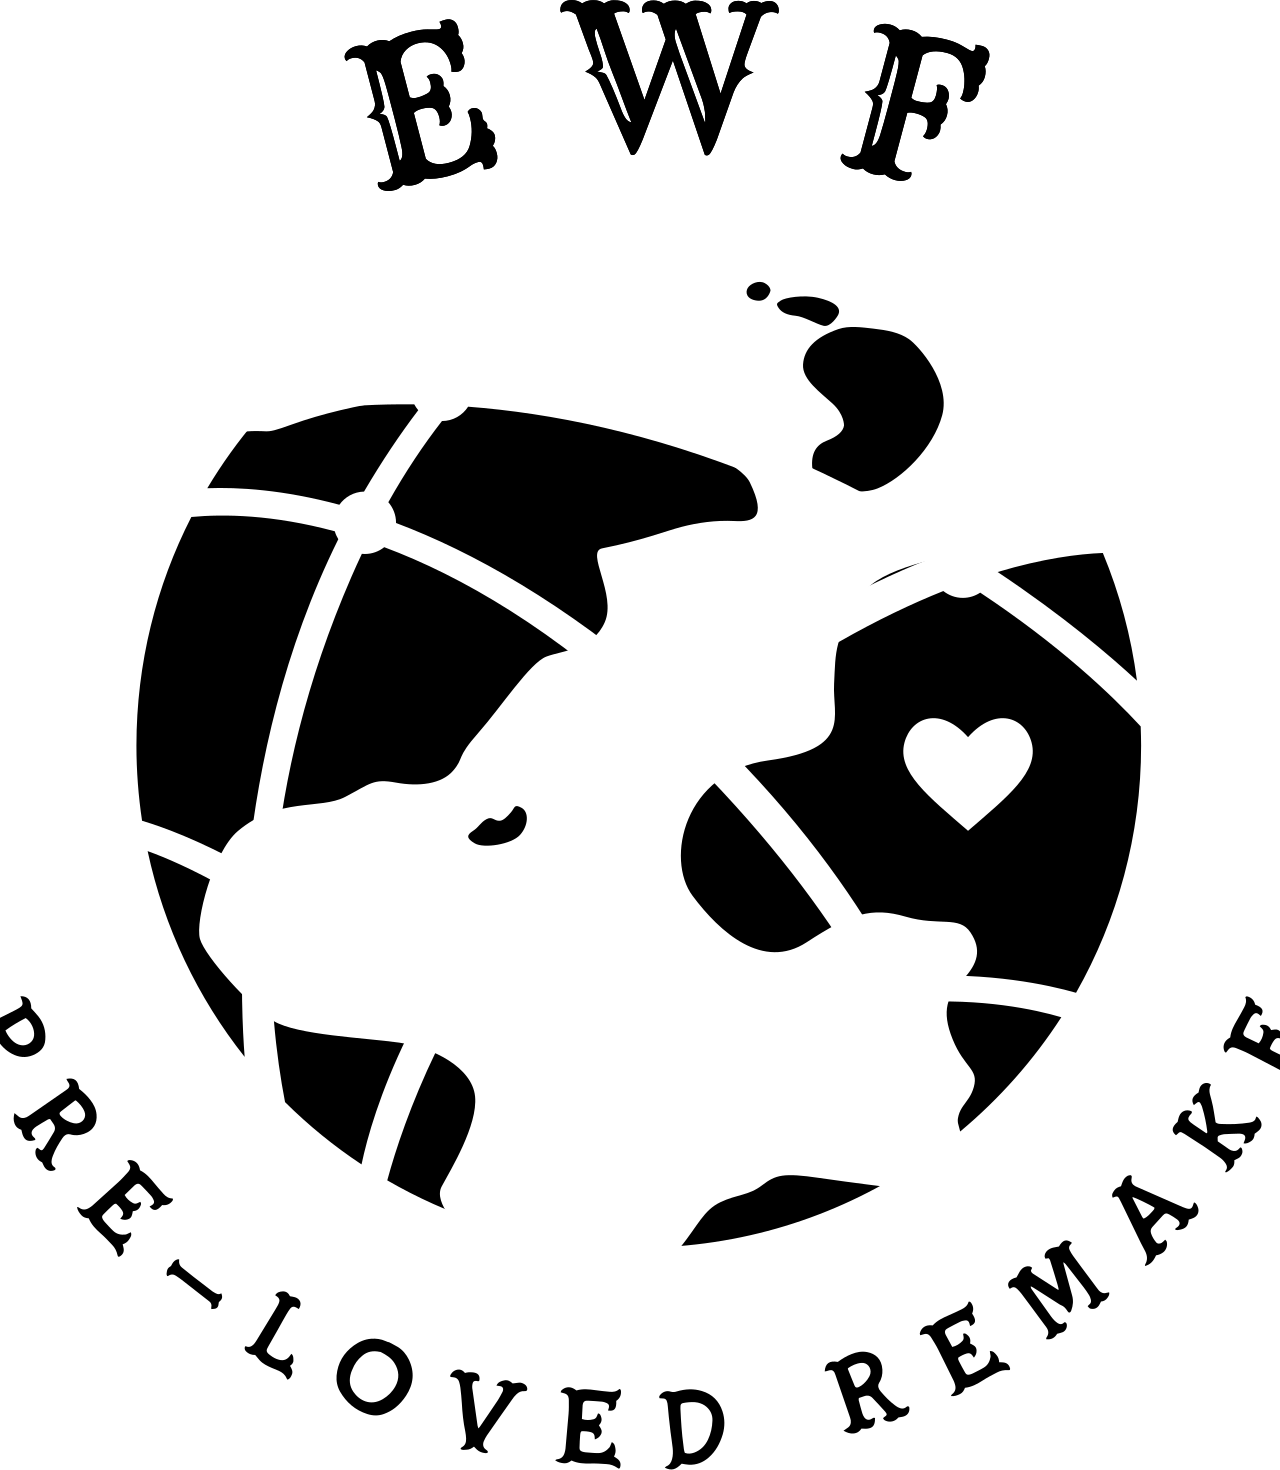 EWF's logo